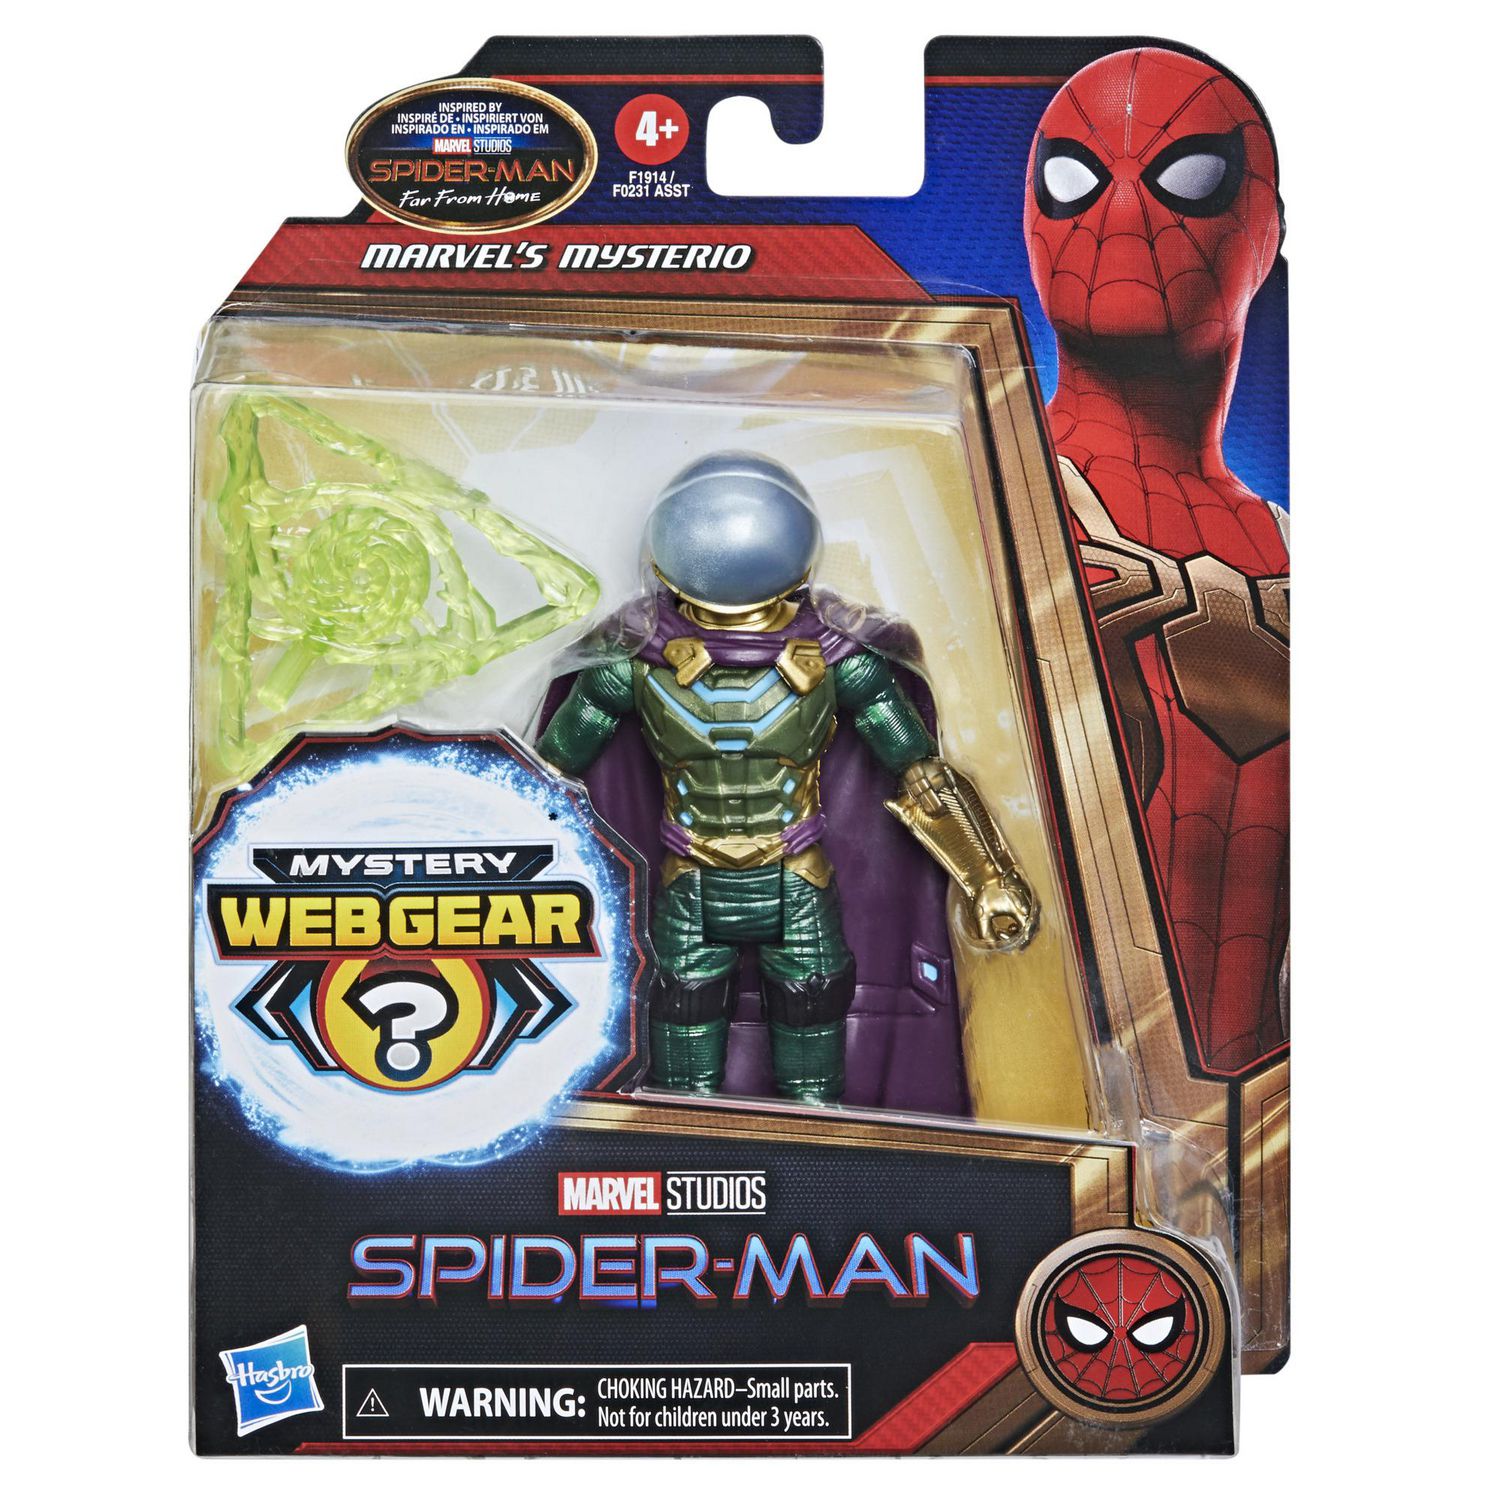 Marvel Spider-Man 6-Inch Mystery Web Gear Marvel's Mysterio 